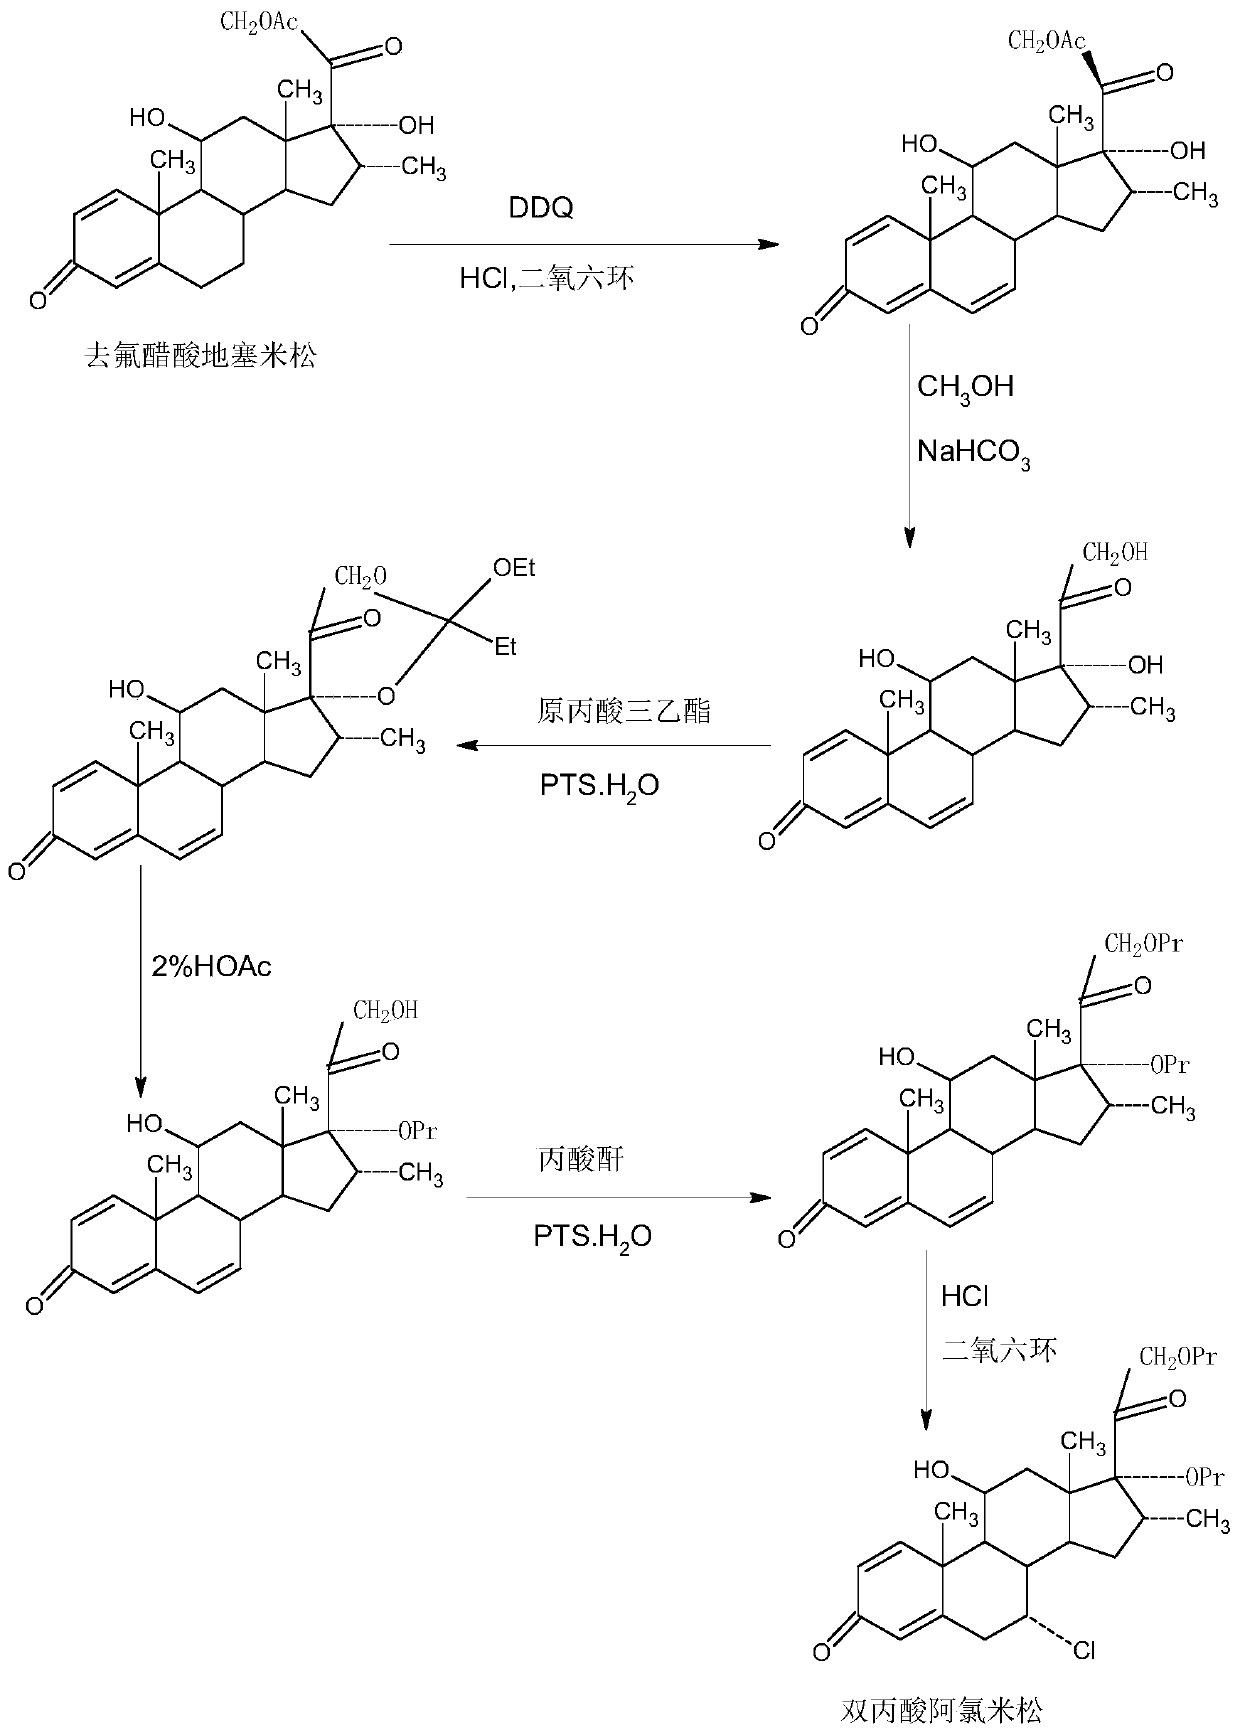 Method for preparing alclometasone dipropionate by using etherified intermediate